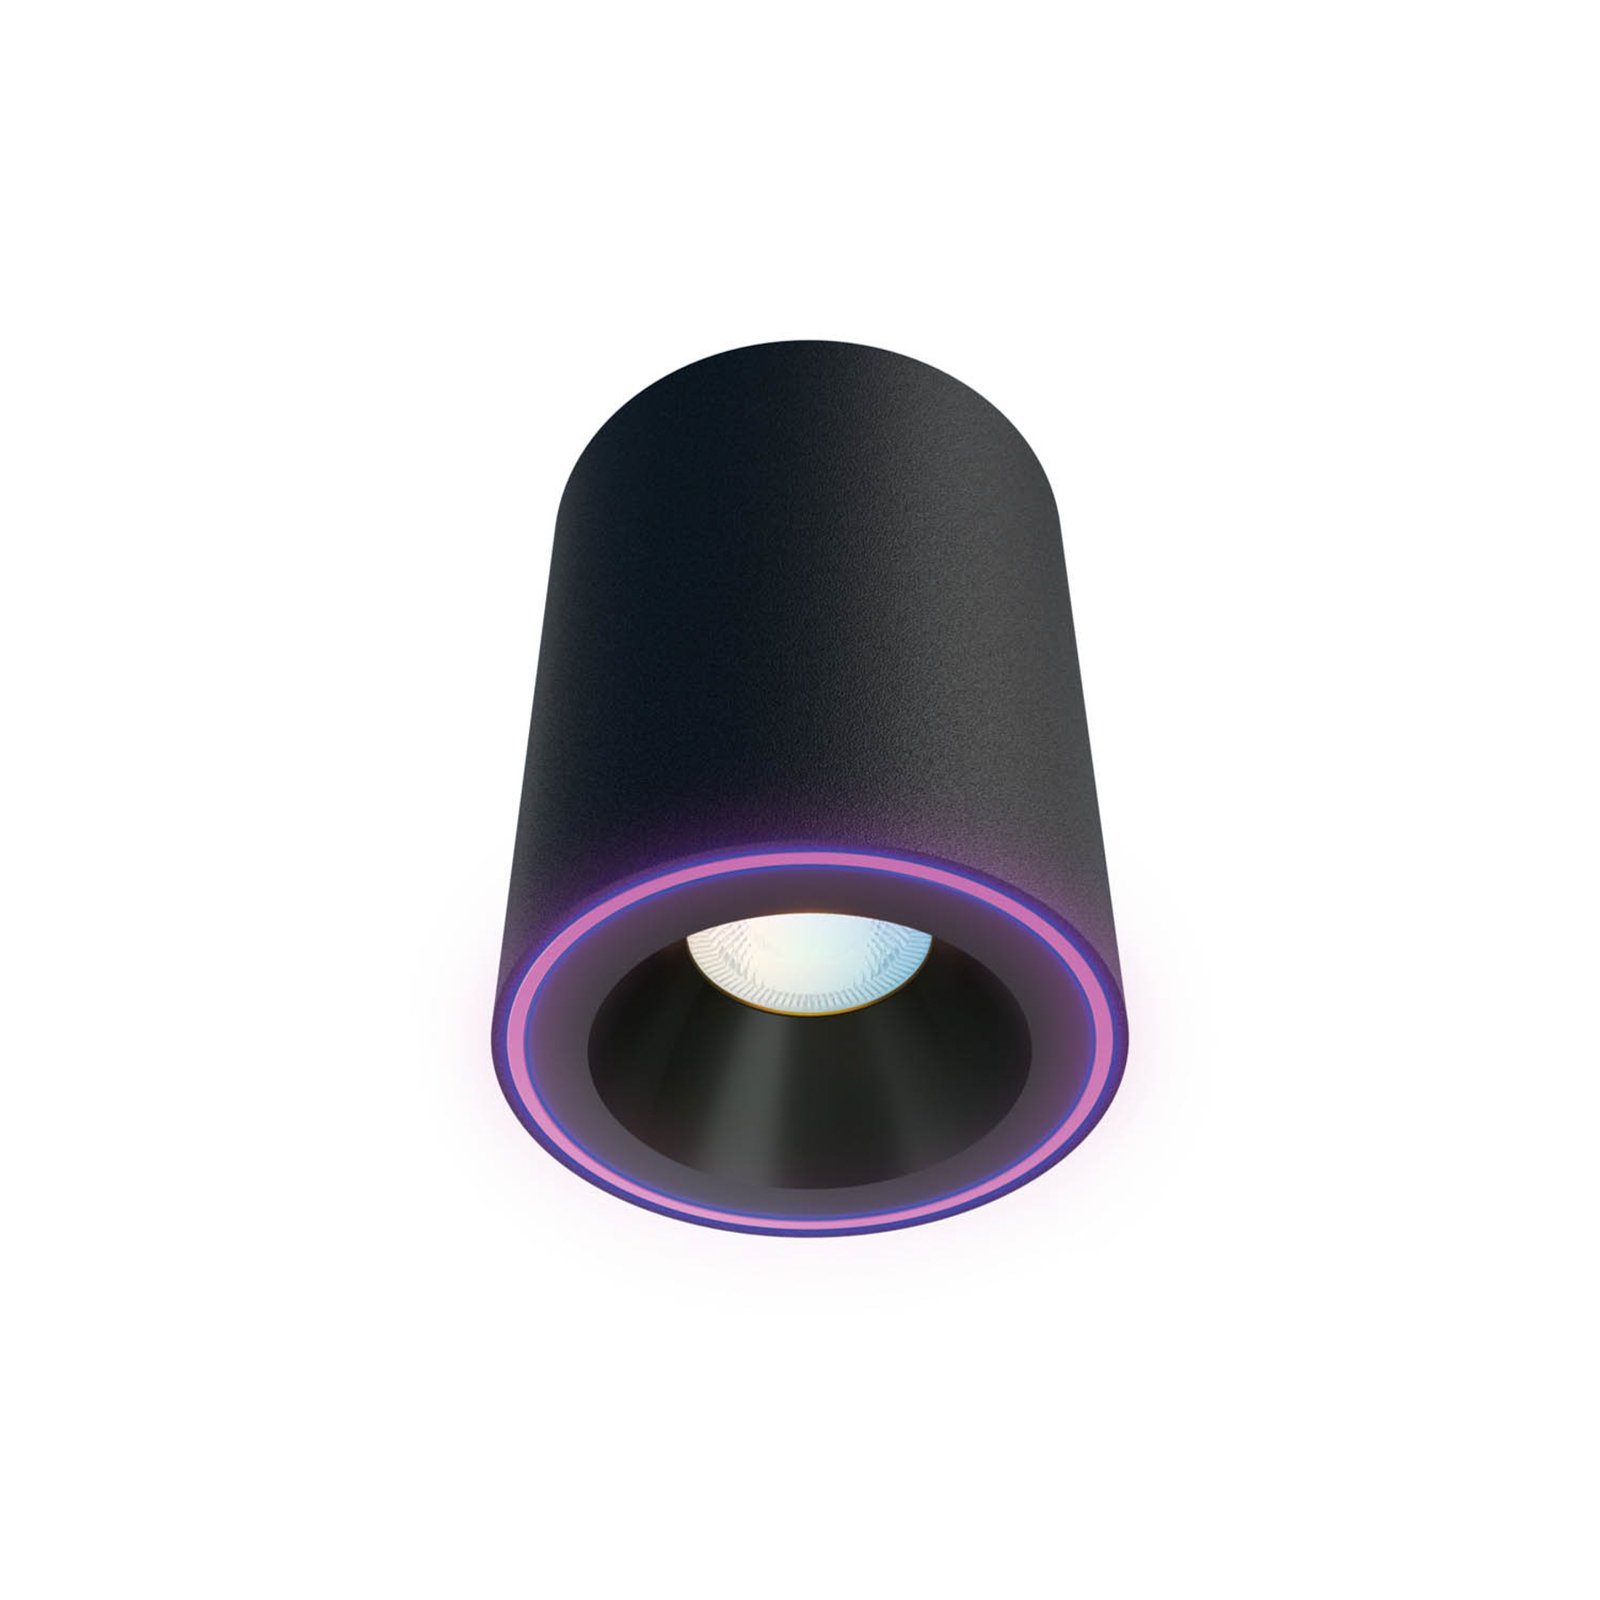 Calex Smart Halo Spot LED downlight, black